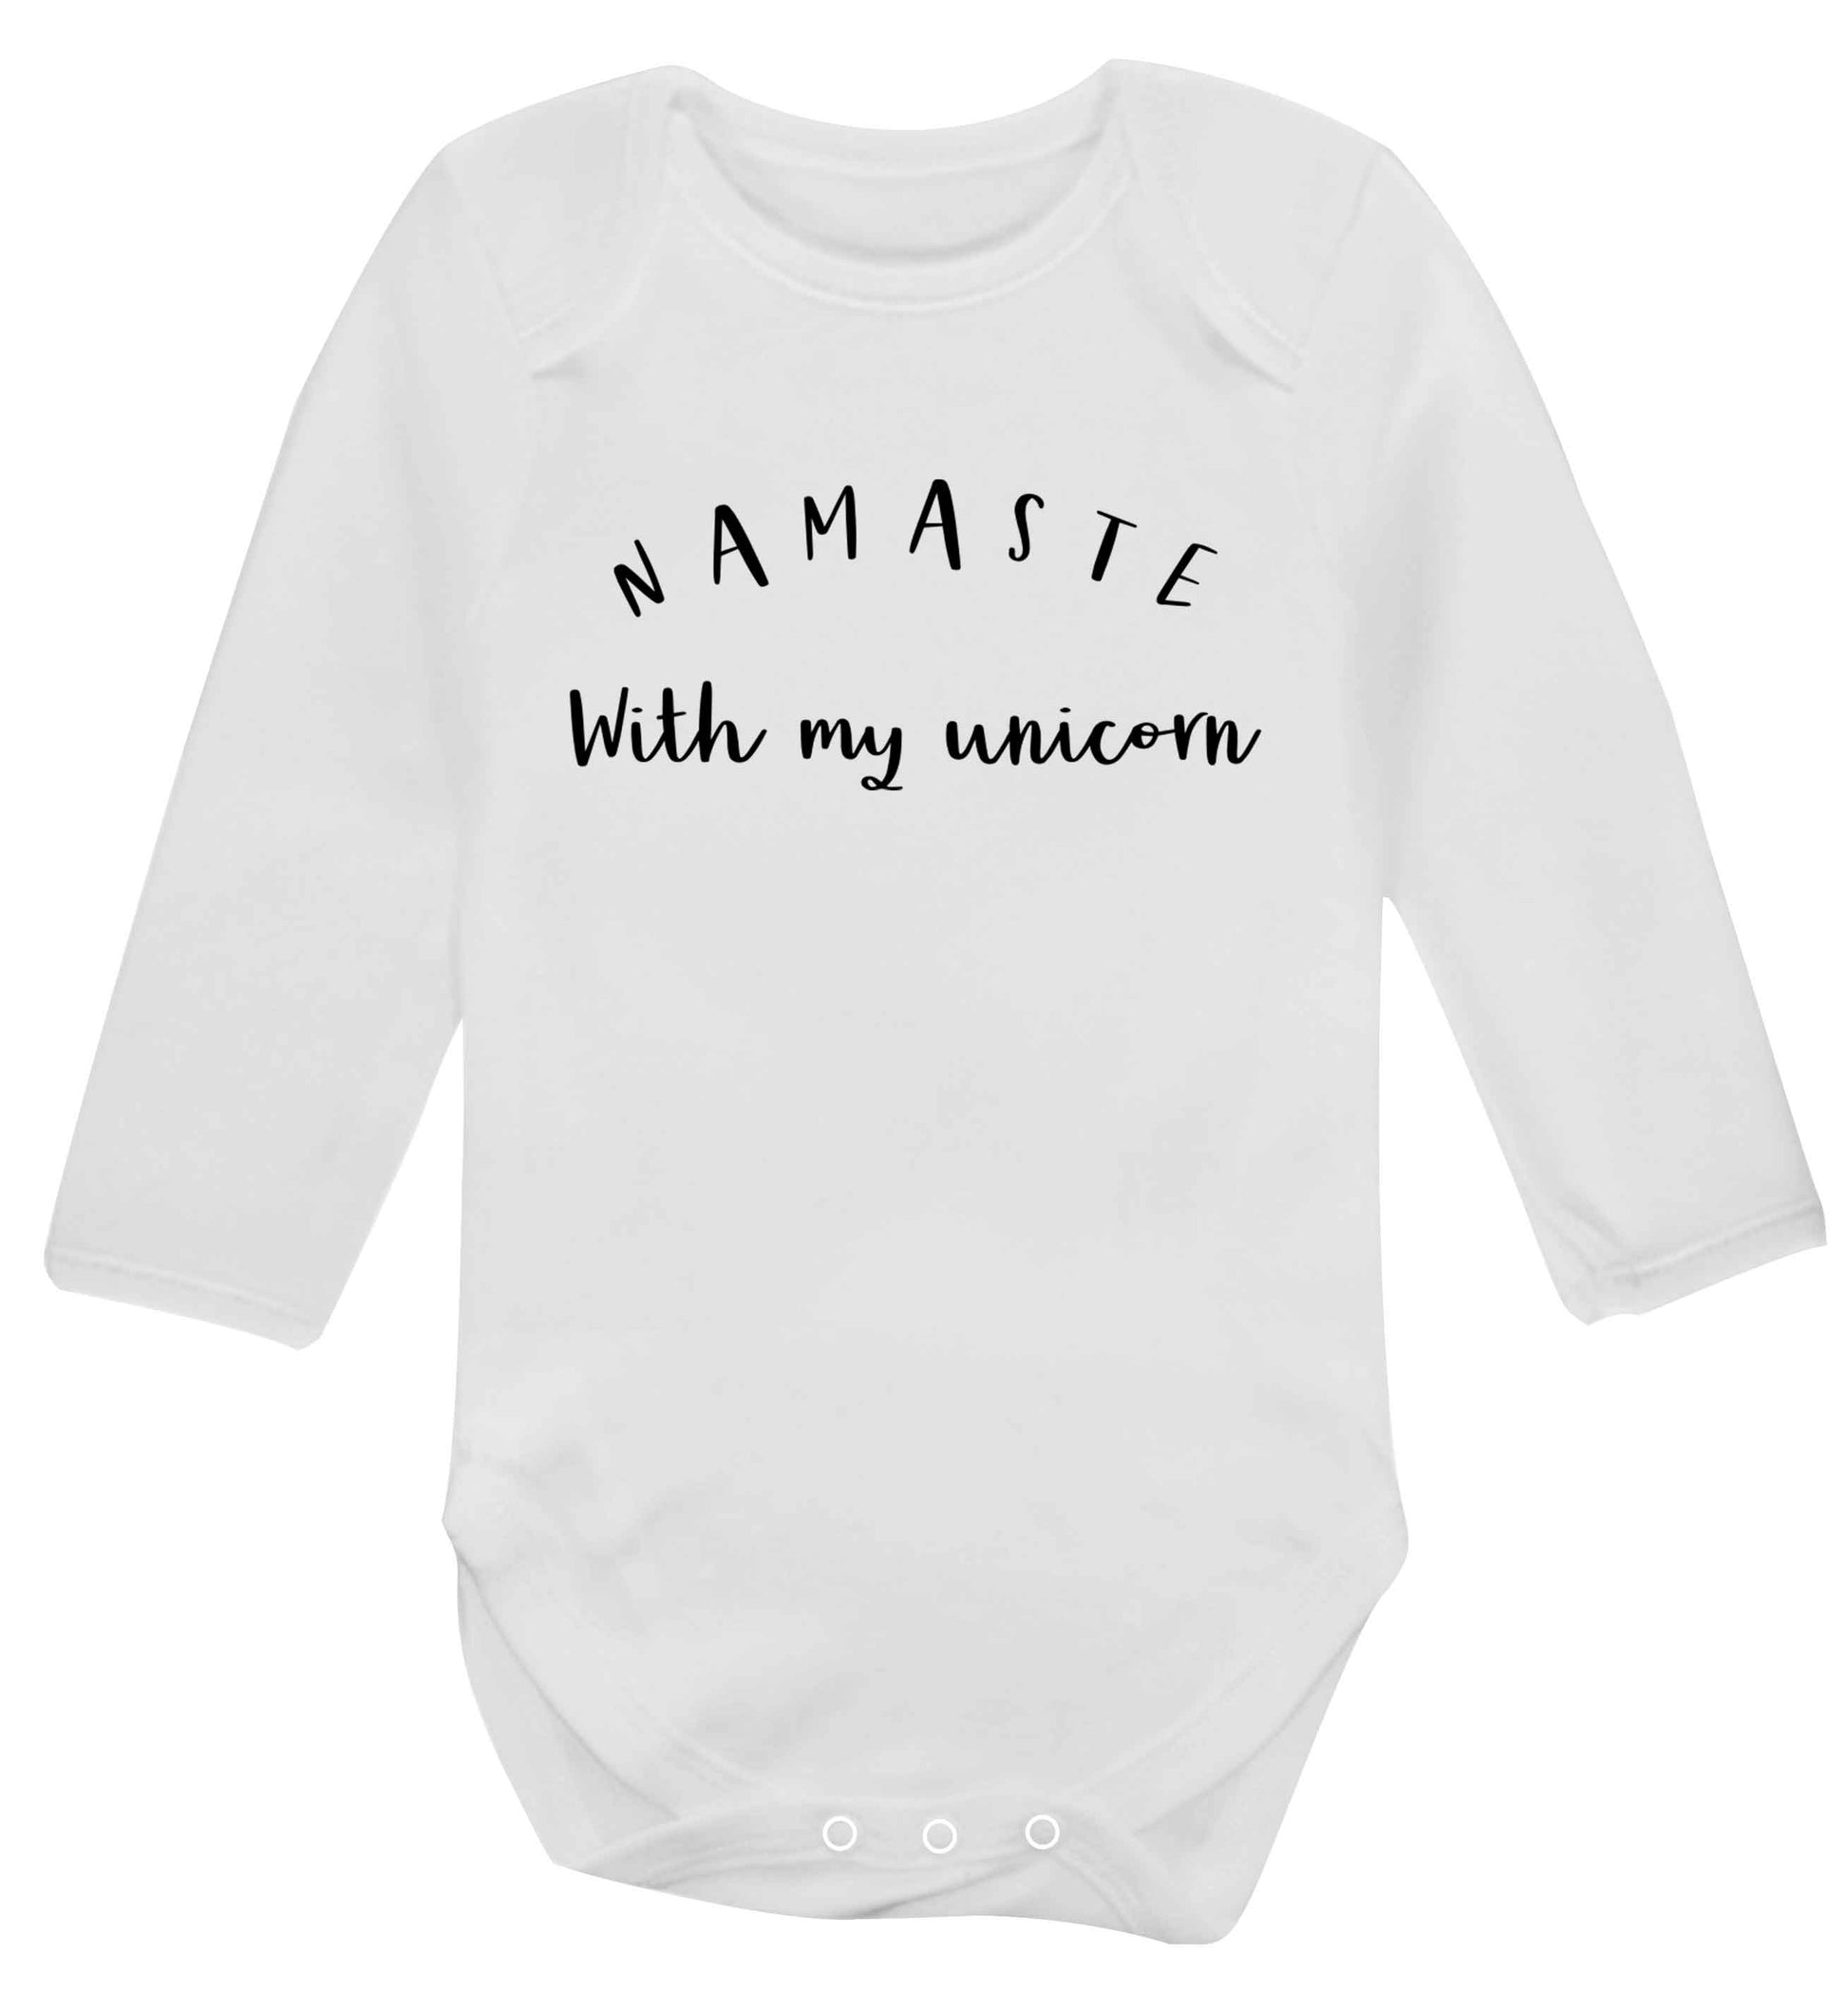 Namaste with my unicorn Baby Vest long sleeved white 6-12 months